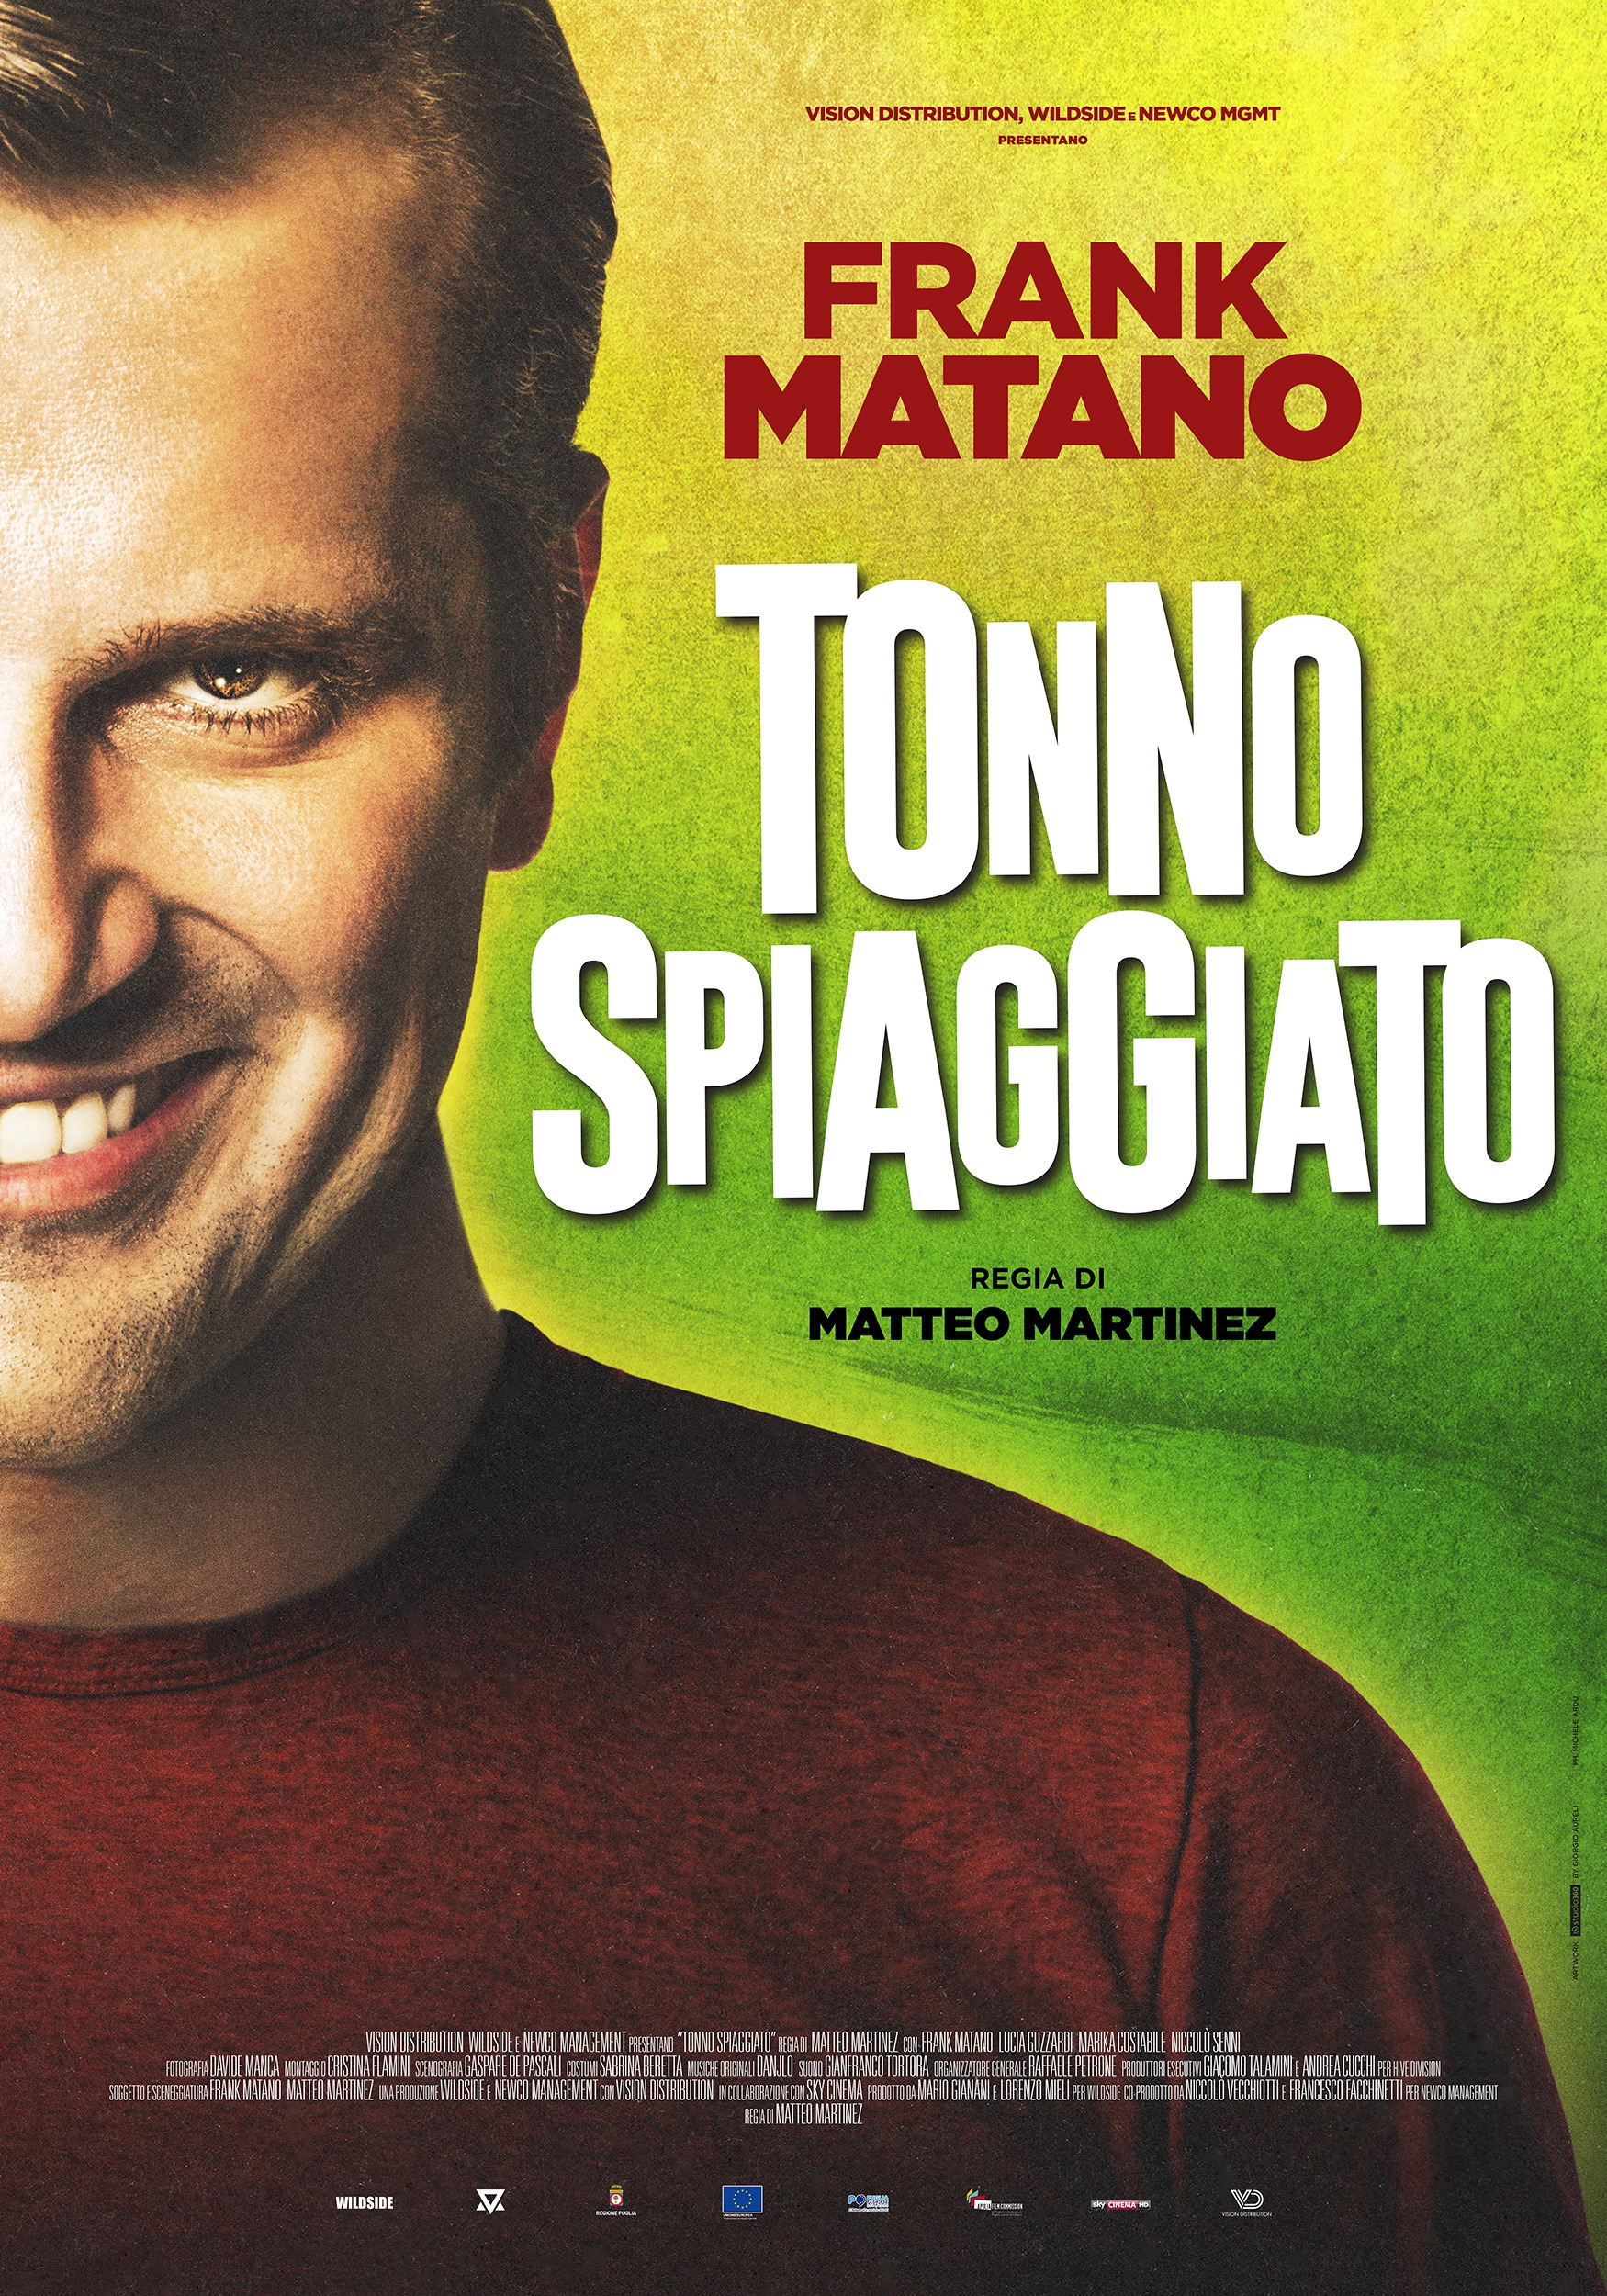 Mega Sized Movie Poster Image for Tonno spiaggiato 